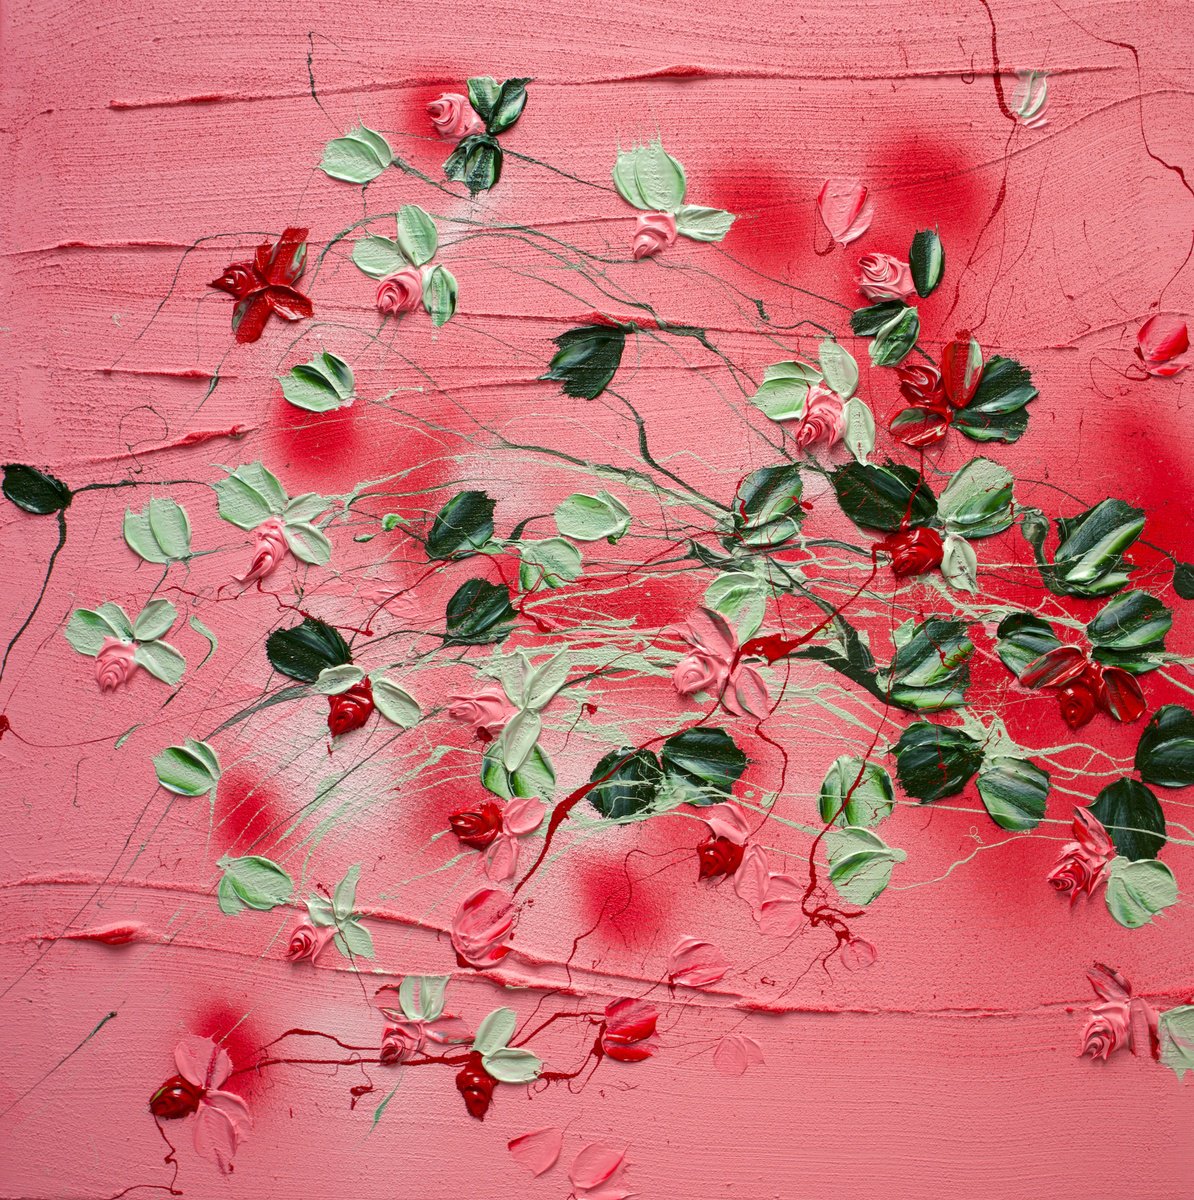 Textured flowers art -Pink Mood-? by Anastassia Skopp